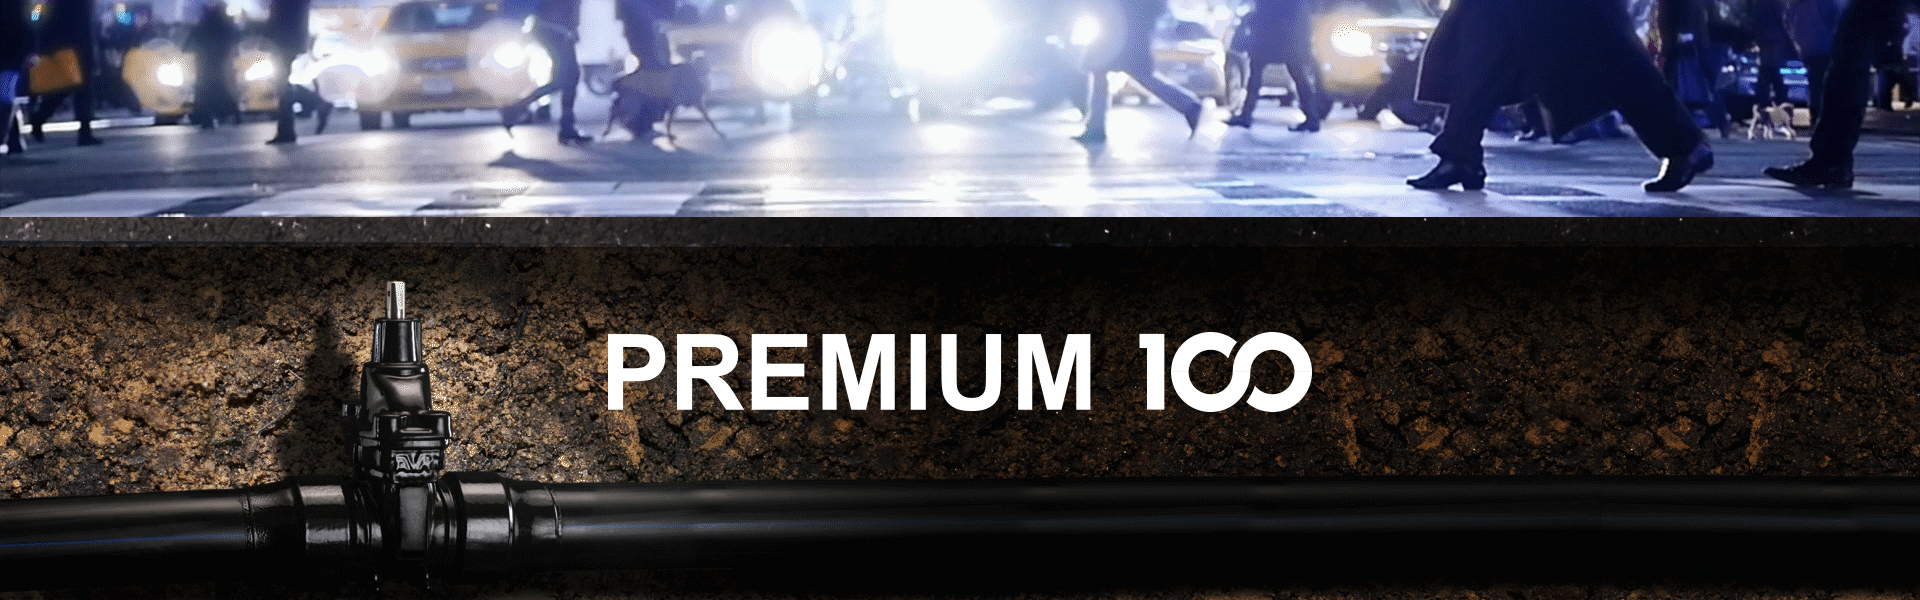 AVK Premium 100 gate valve underground